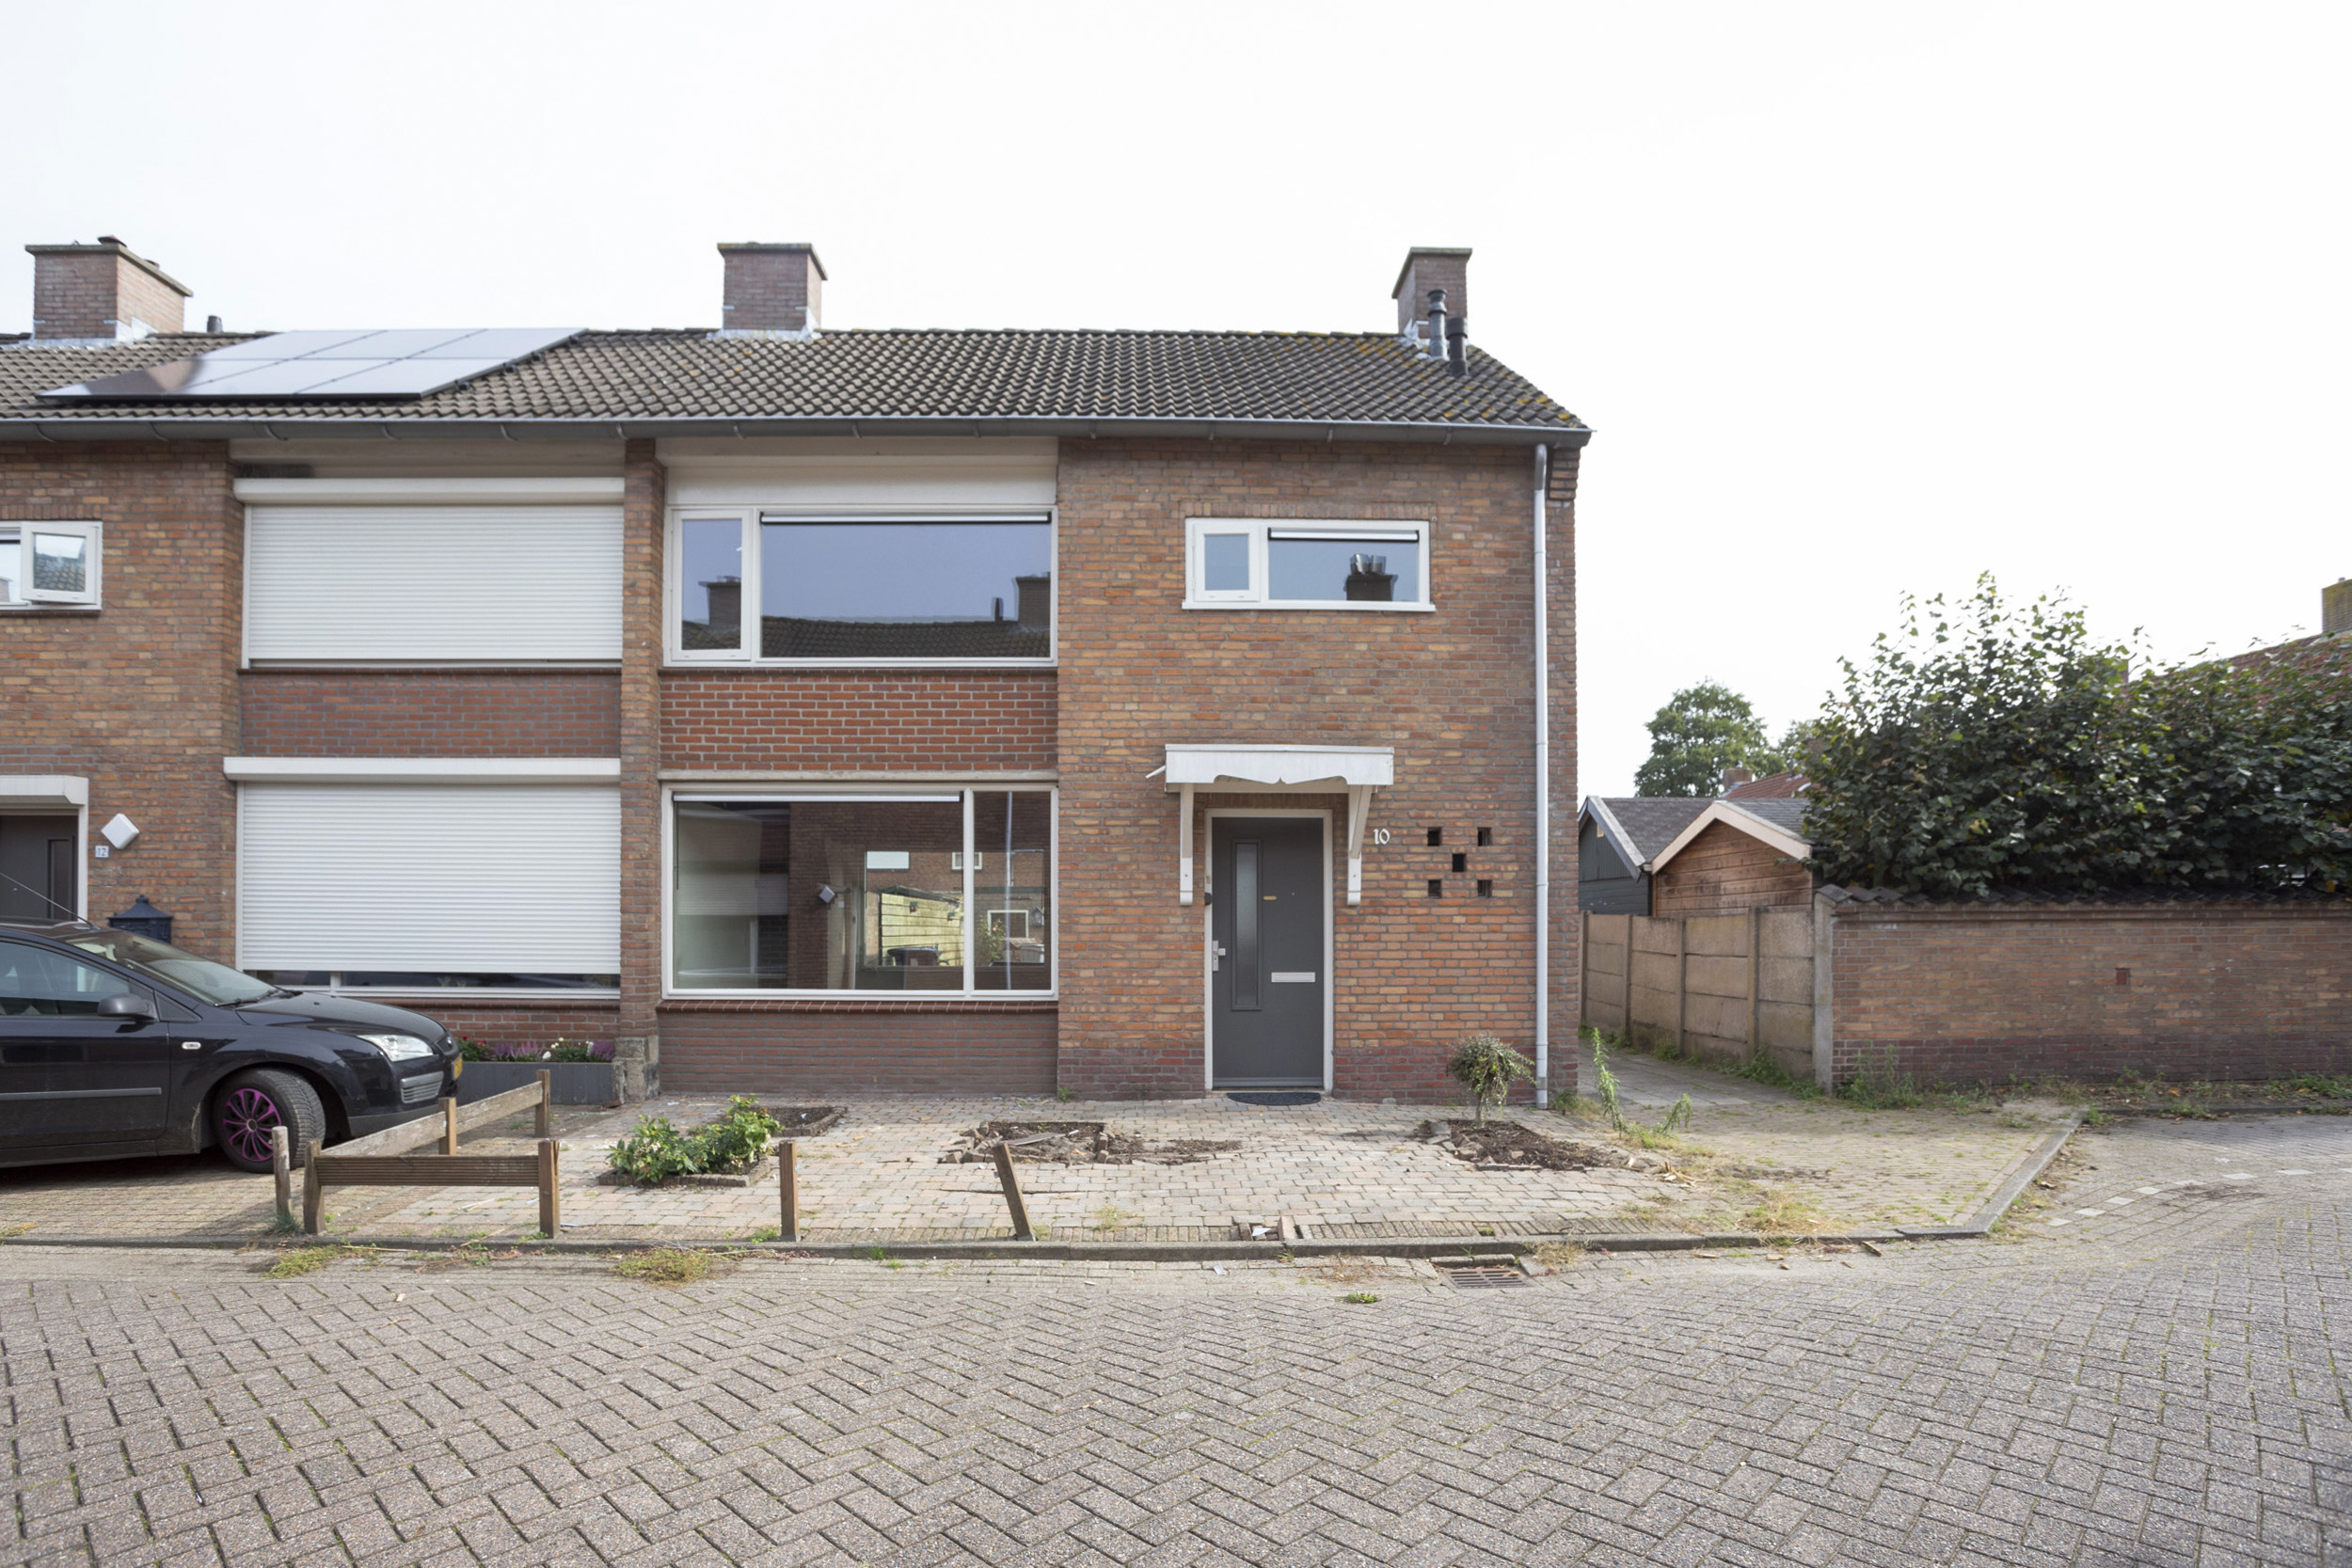 Van Boutershemstraat 10, 4715 AR Rucphen, Nederland